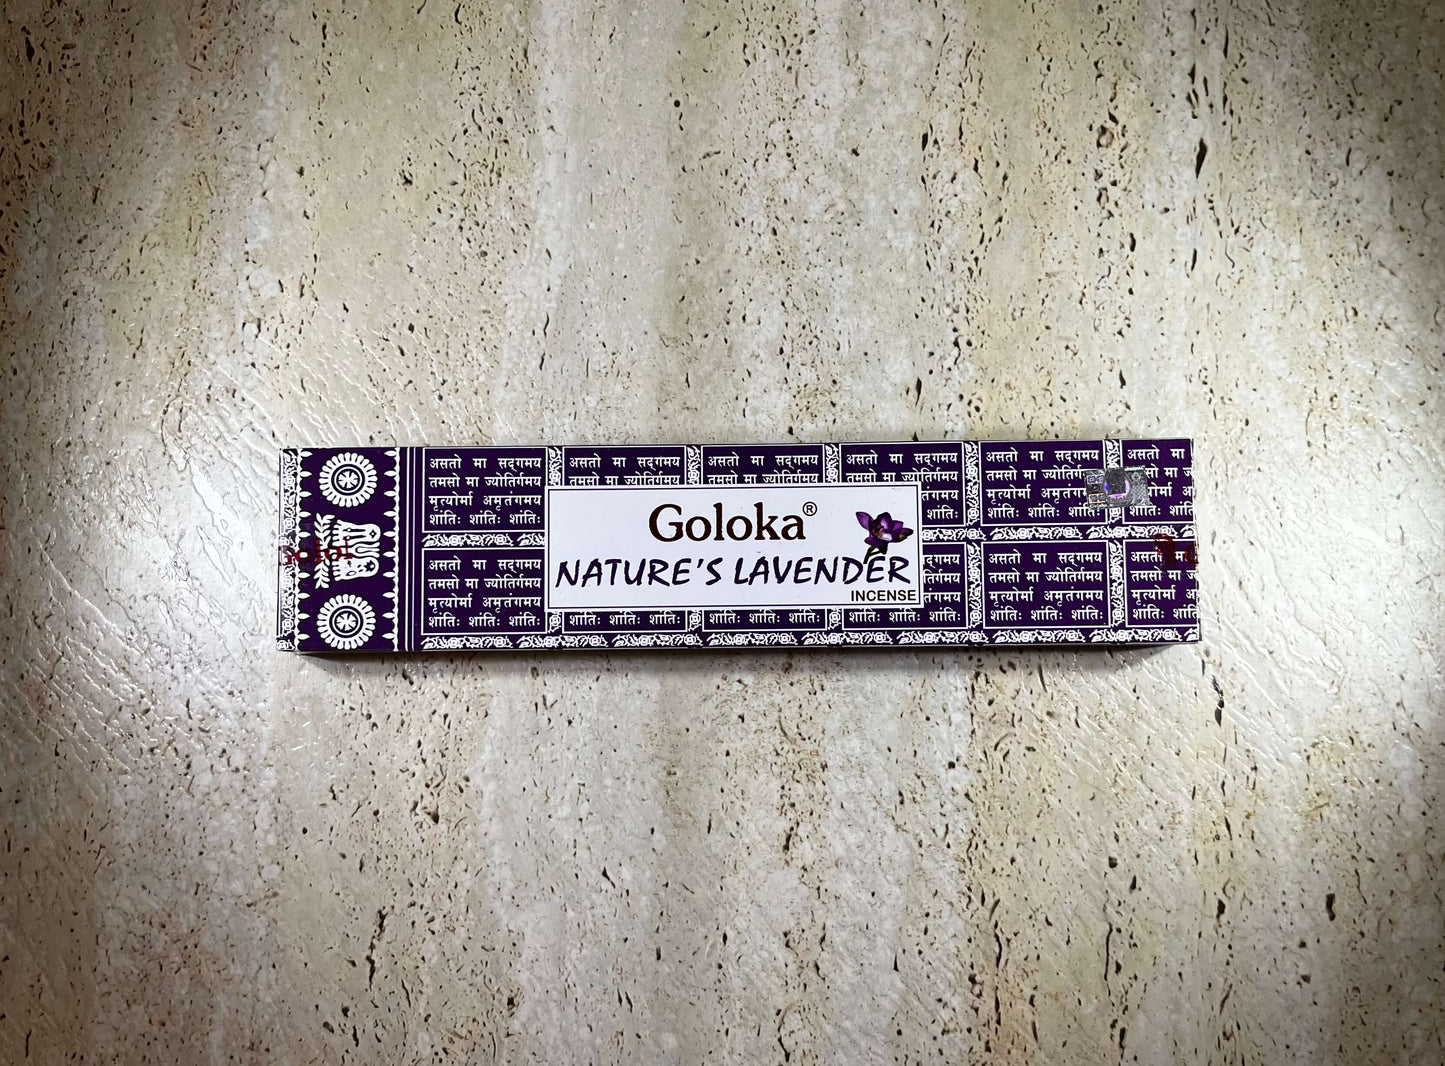 Goloka Nature's Lavender incense